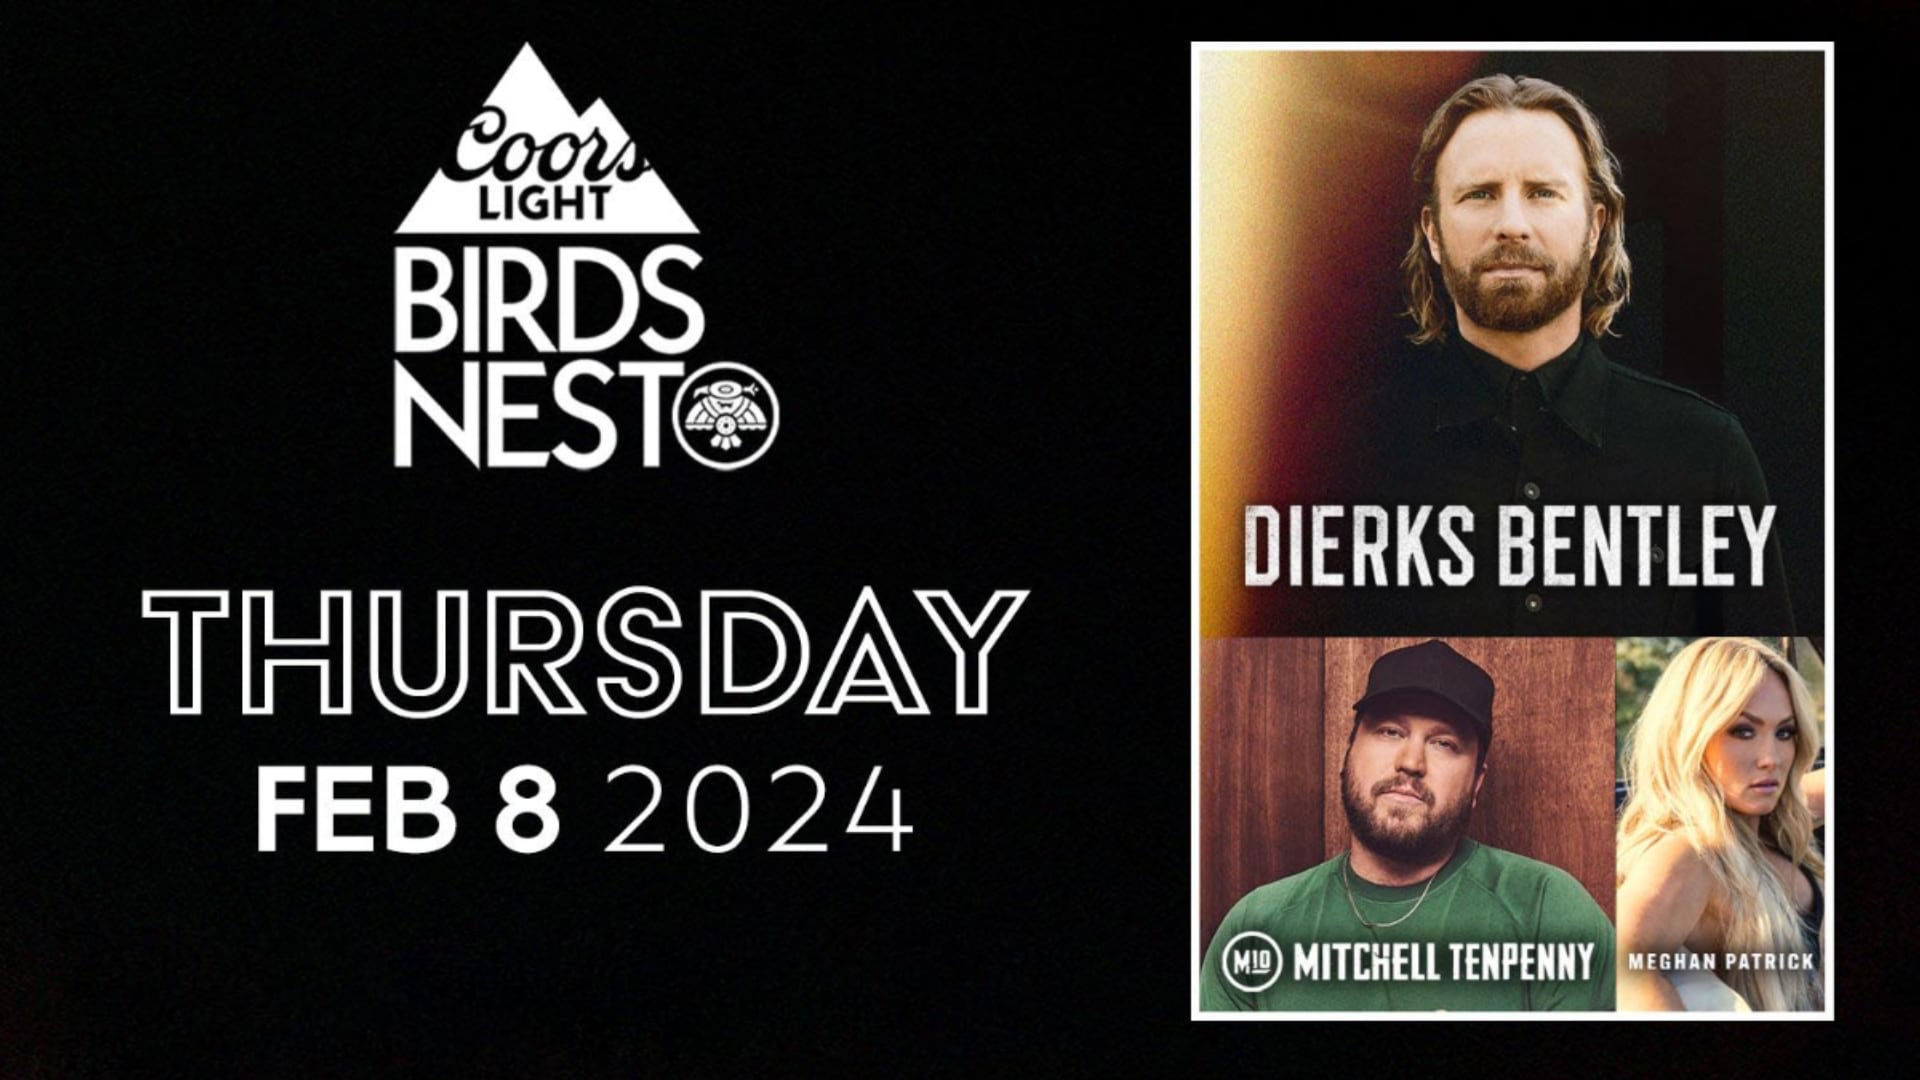 Dierks Bentley to headline Thursday night at 2024 Coors Light Birds Nest